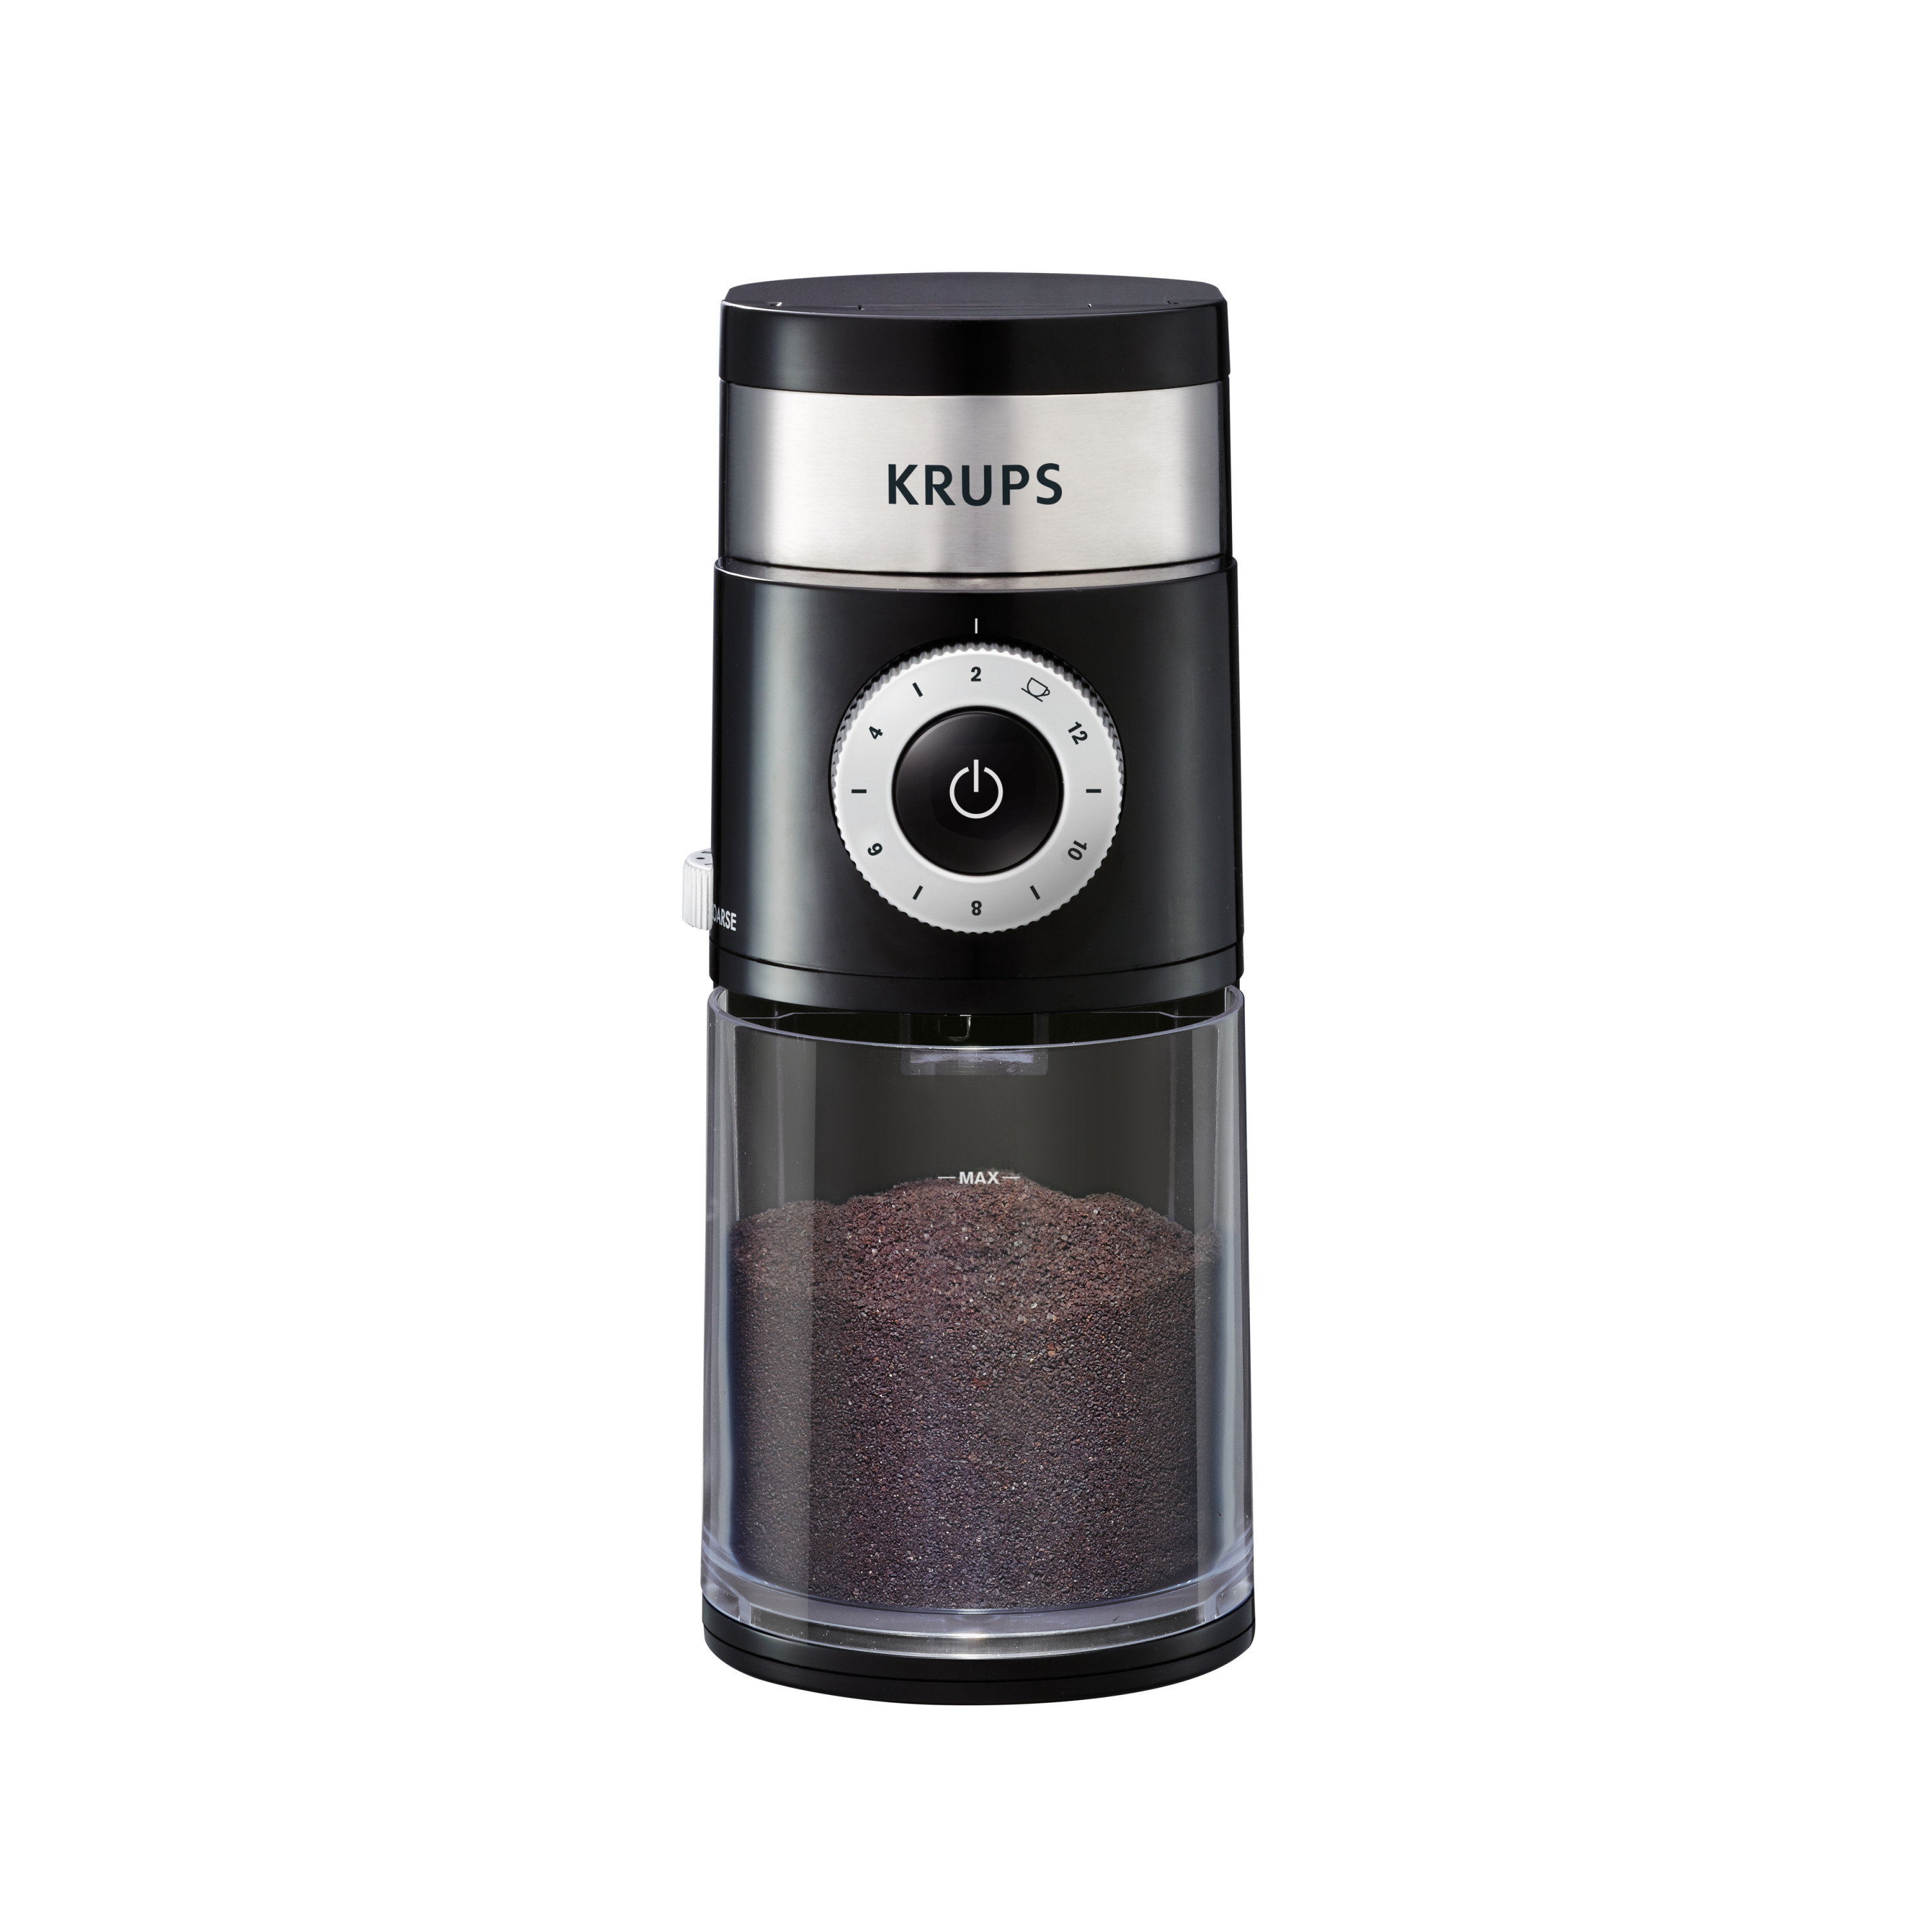 Mr. Coffee 12 Cup Automatic Burr Coffee Grinder - Black